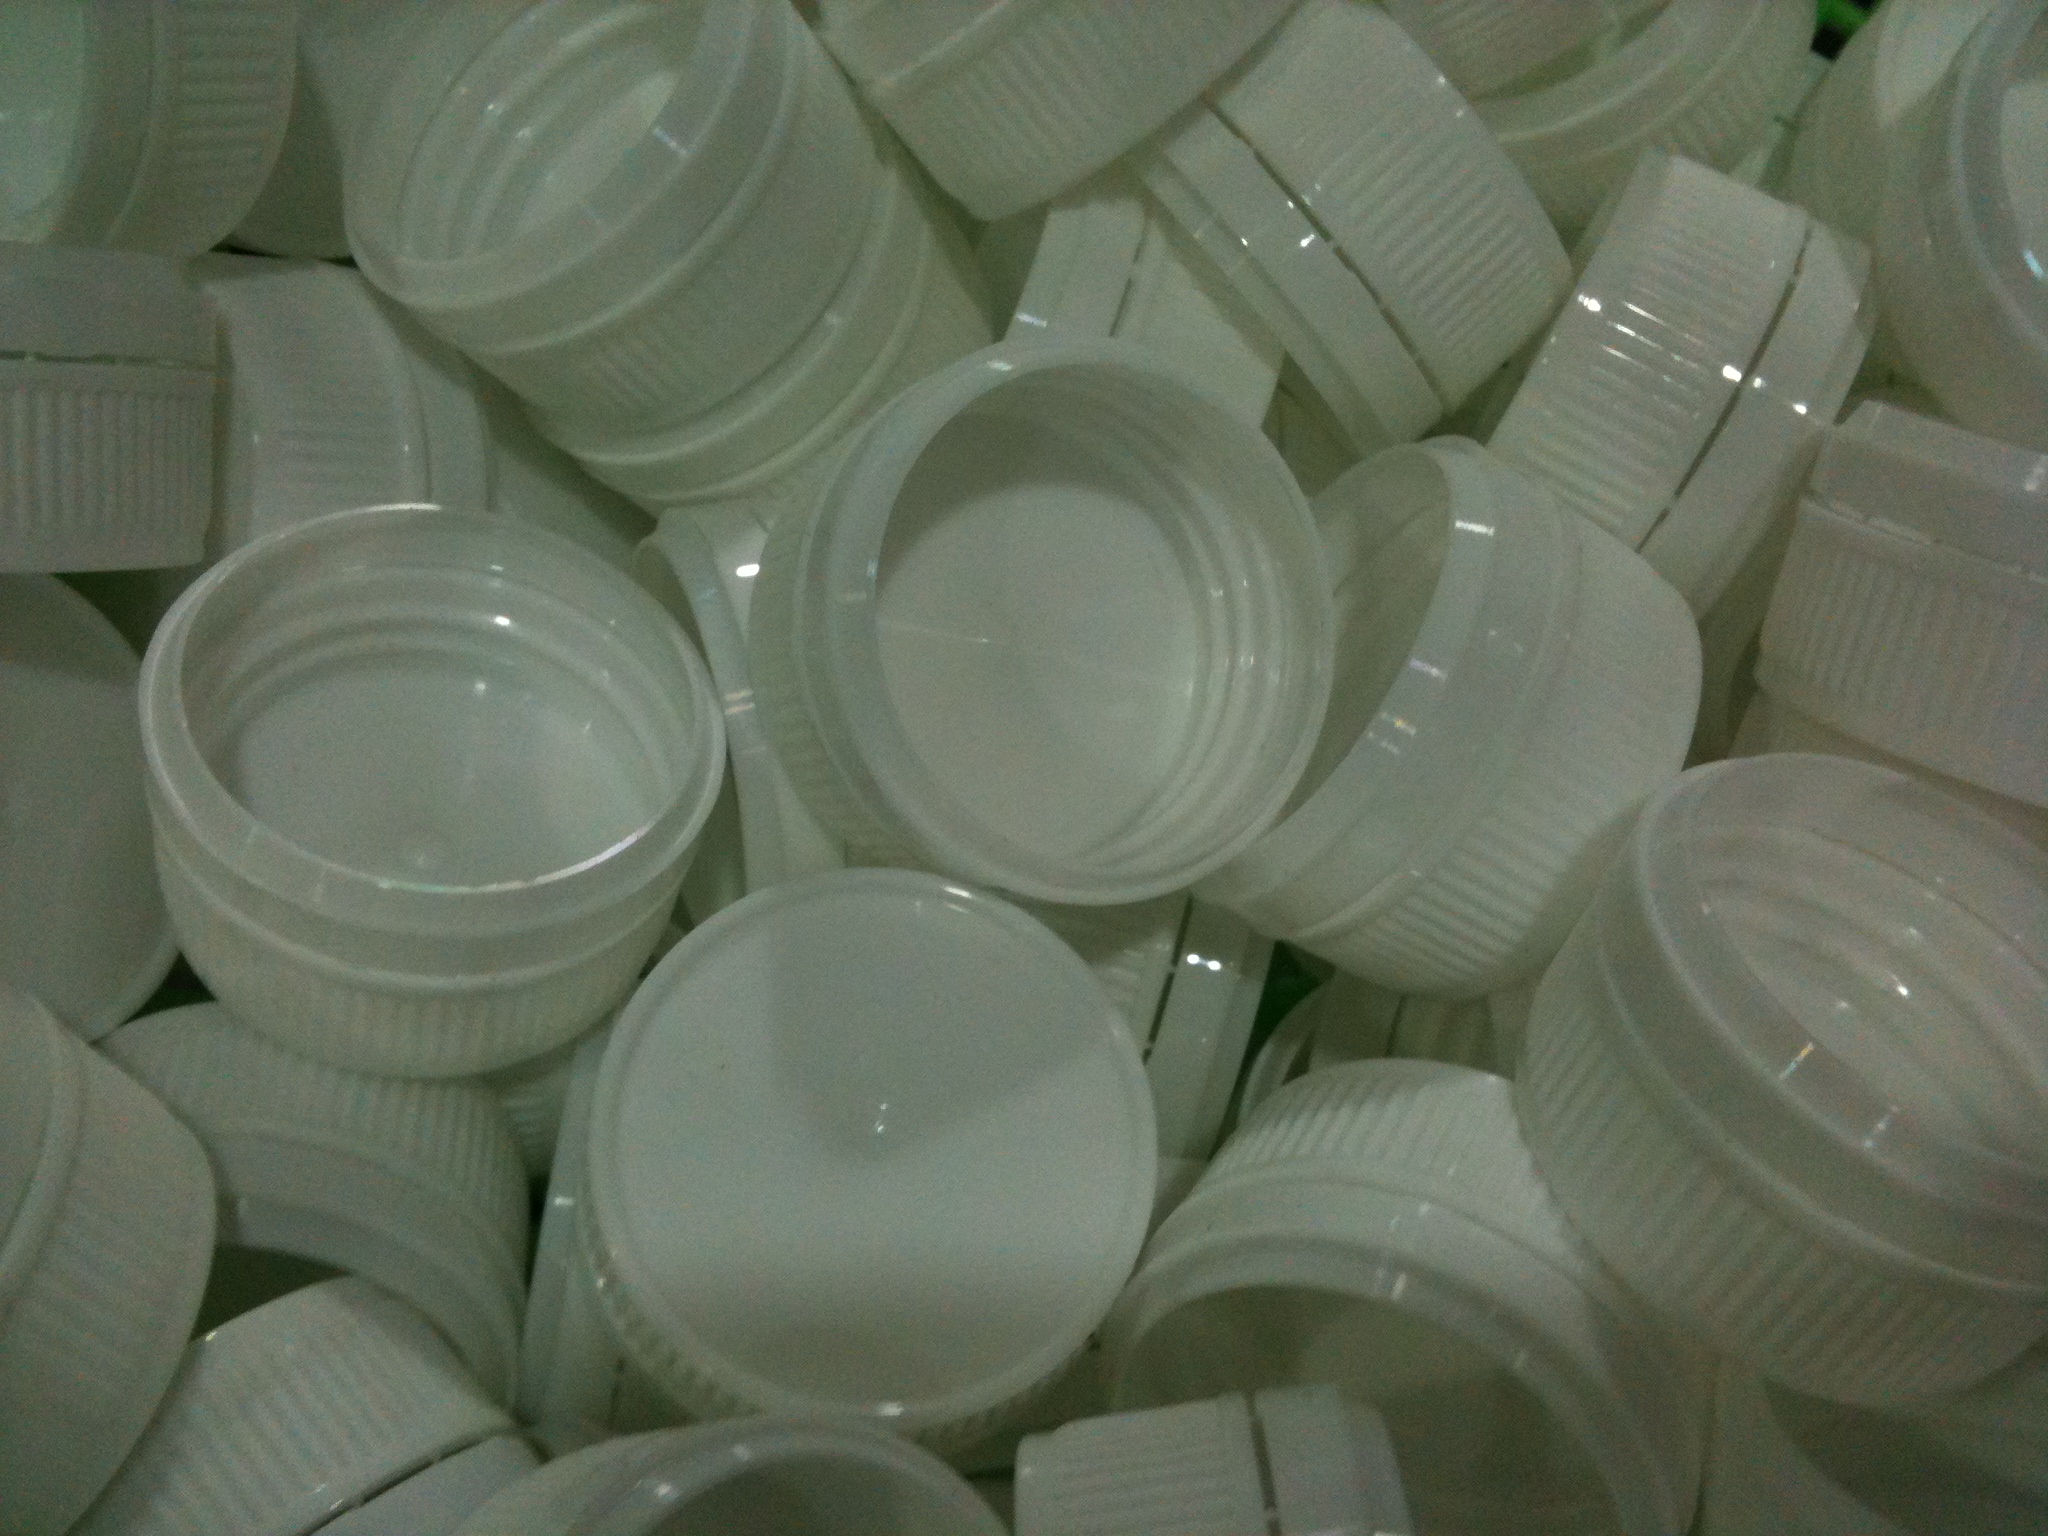 plastic lids and closures